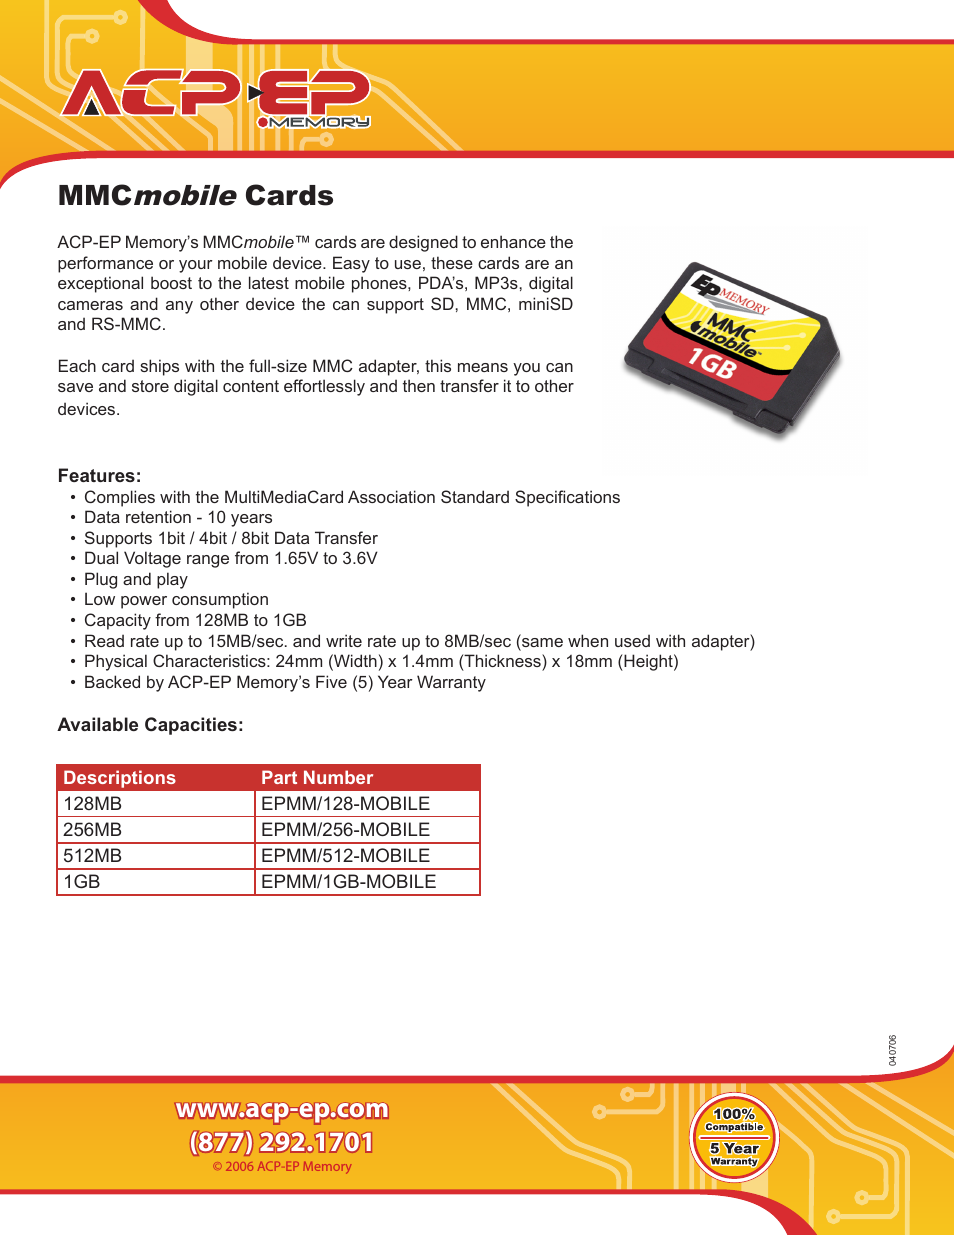 MMCmobile EPMM/128-MOBILE